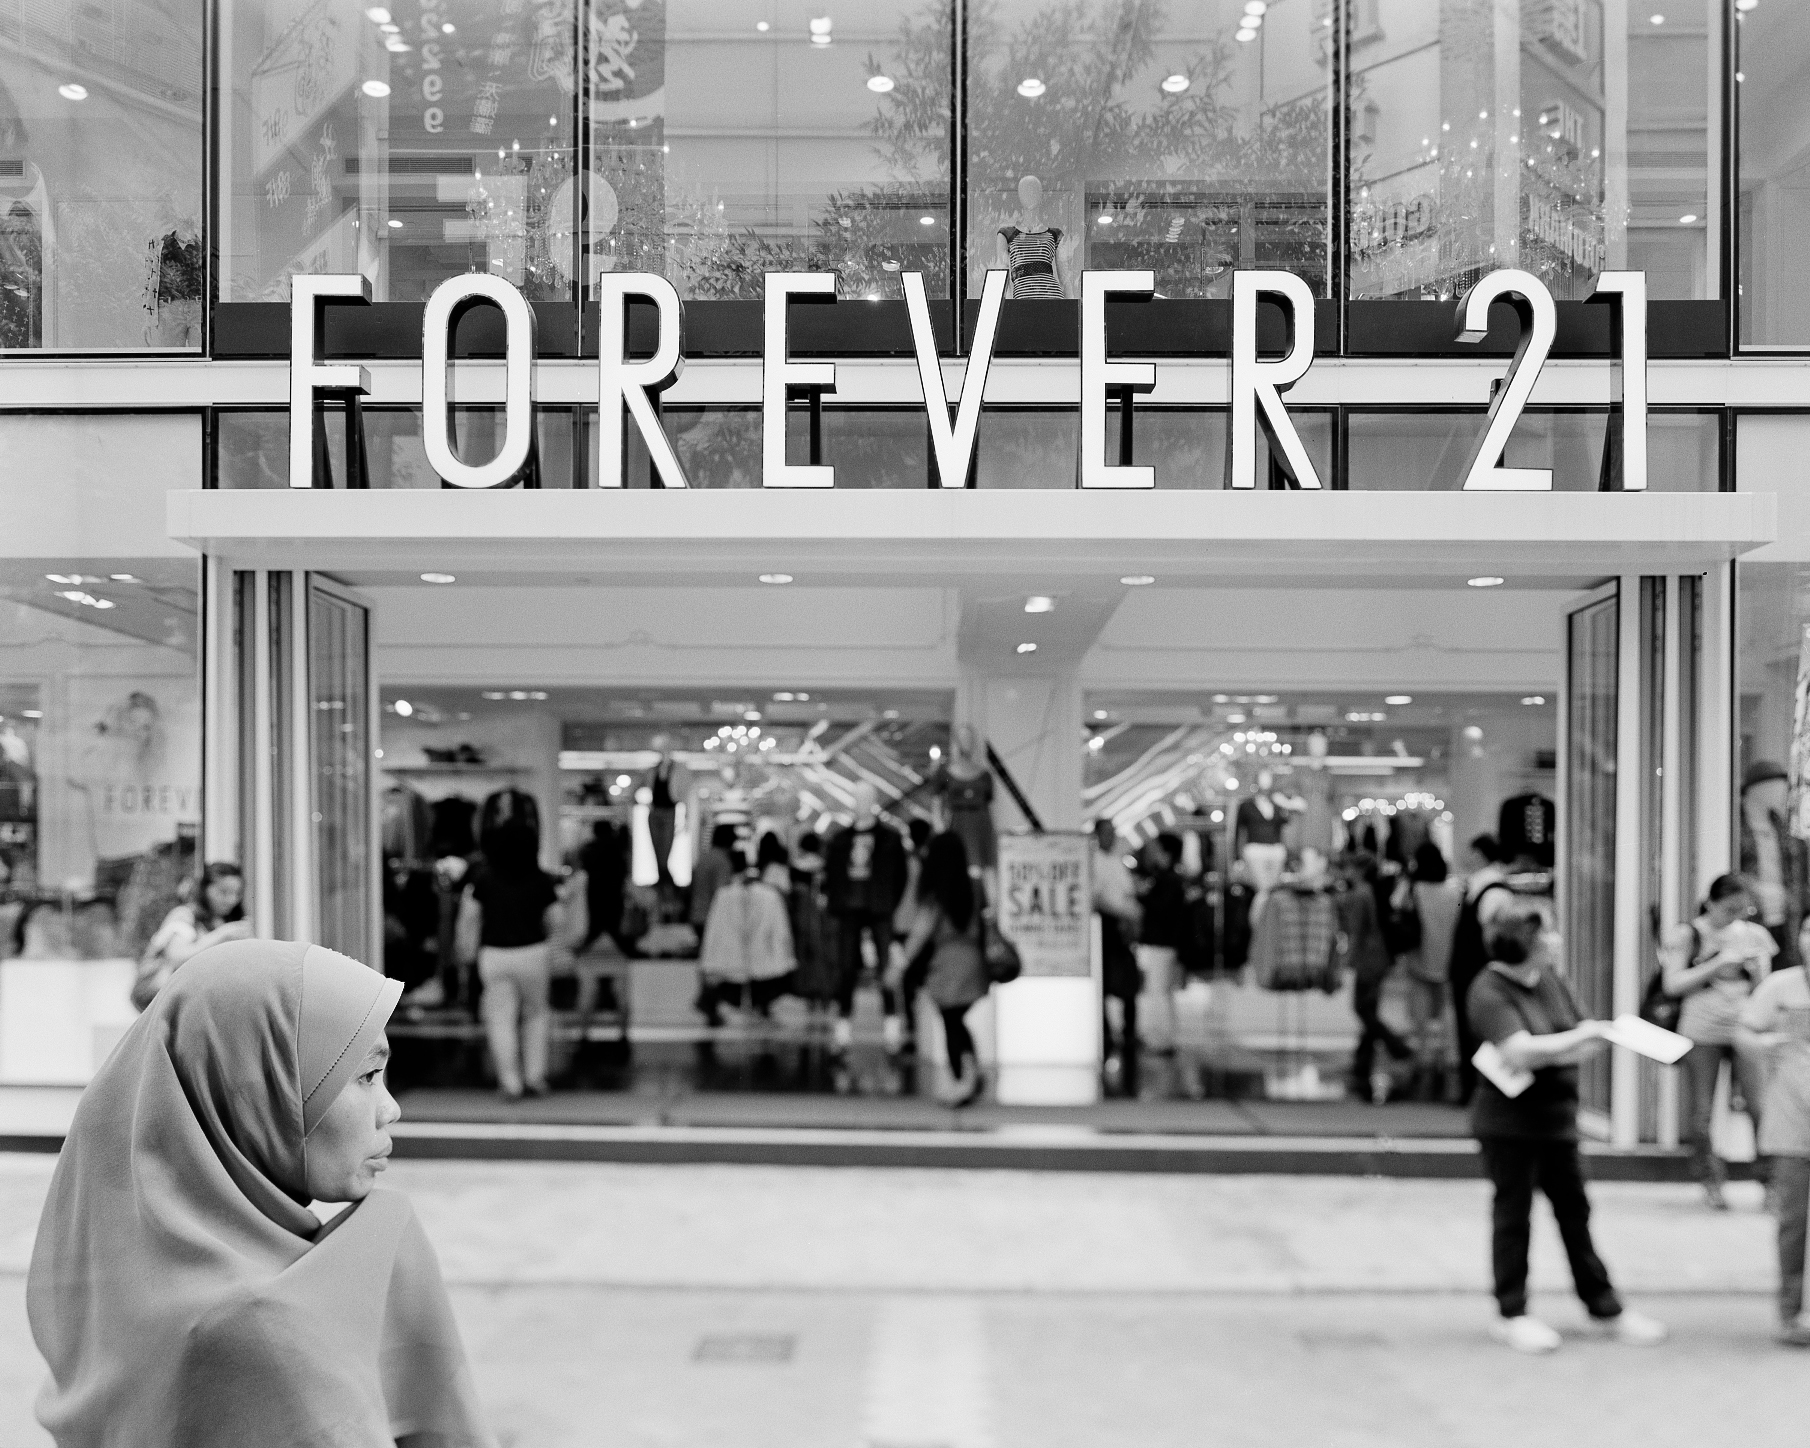 Everyone Wants To Be Forever 21, Hong Kong (2012)